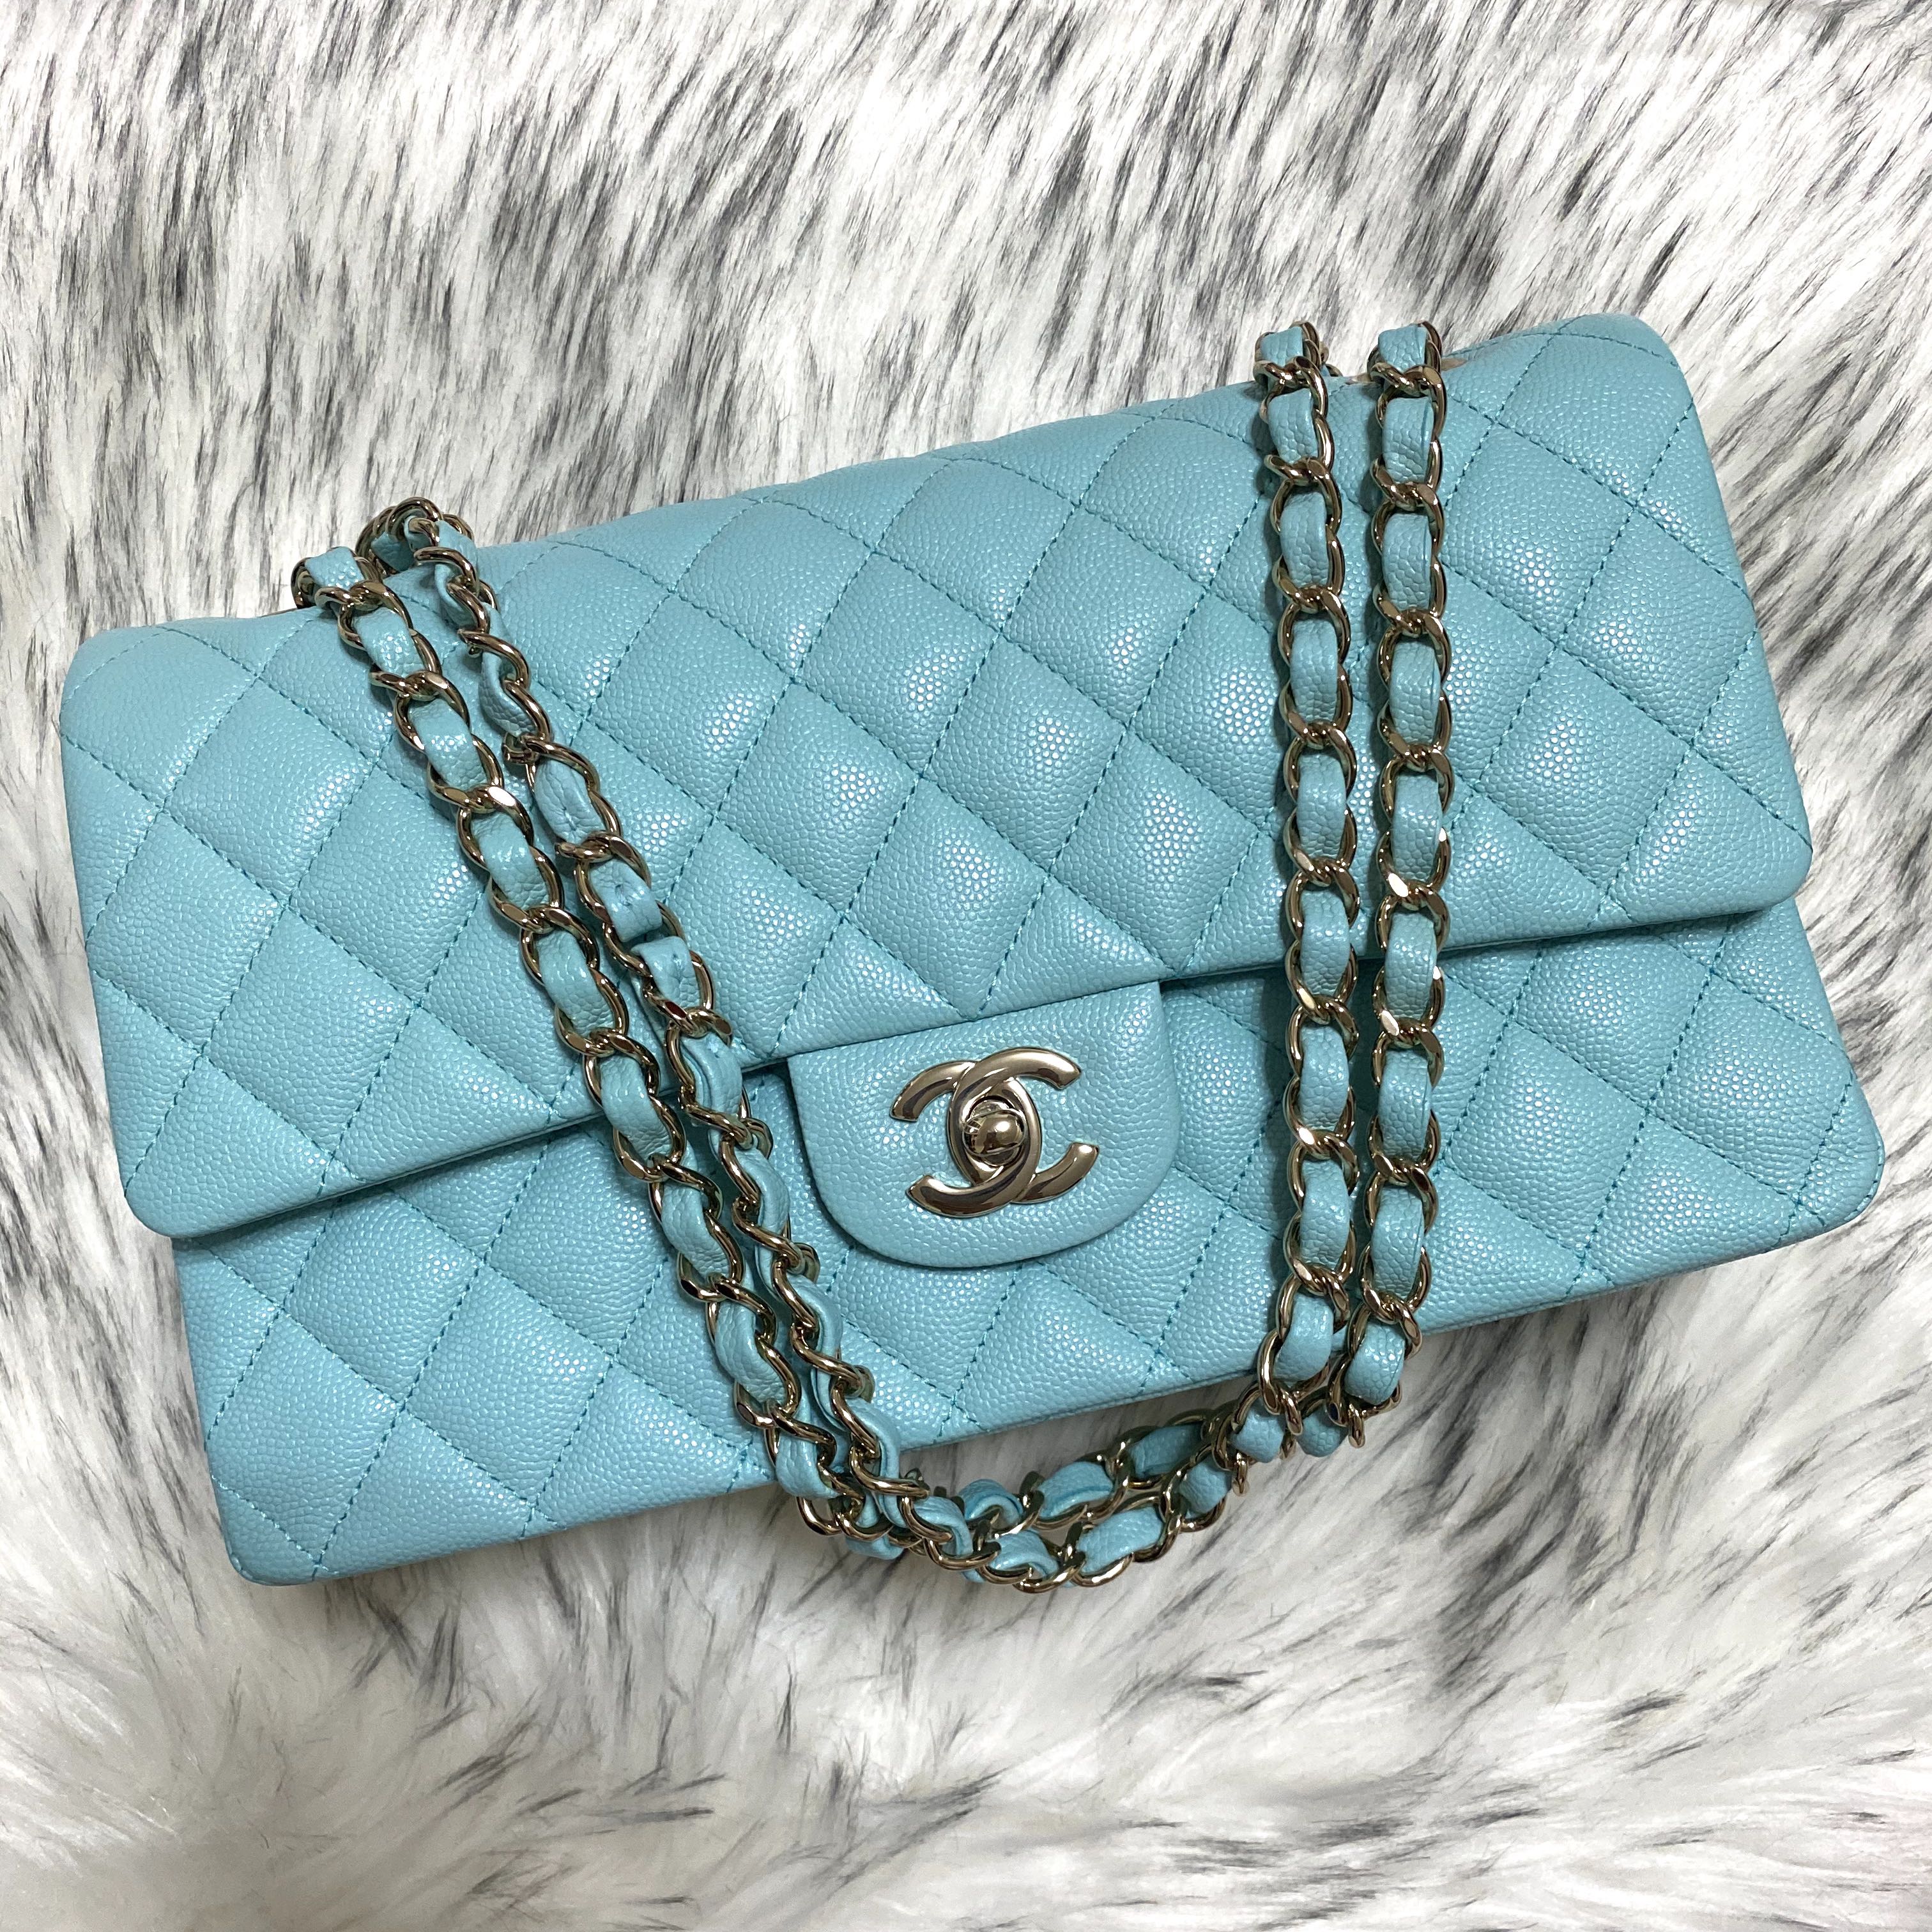 Chanel Medium Flap Tiffany Blue Real VS Fake ❌